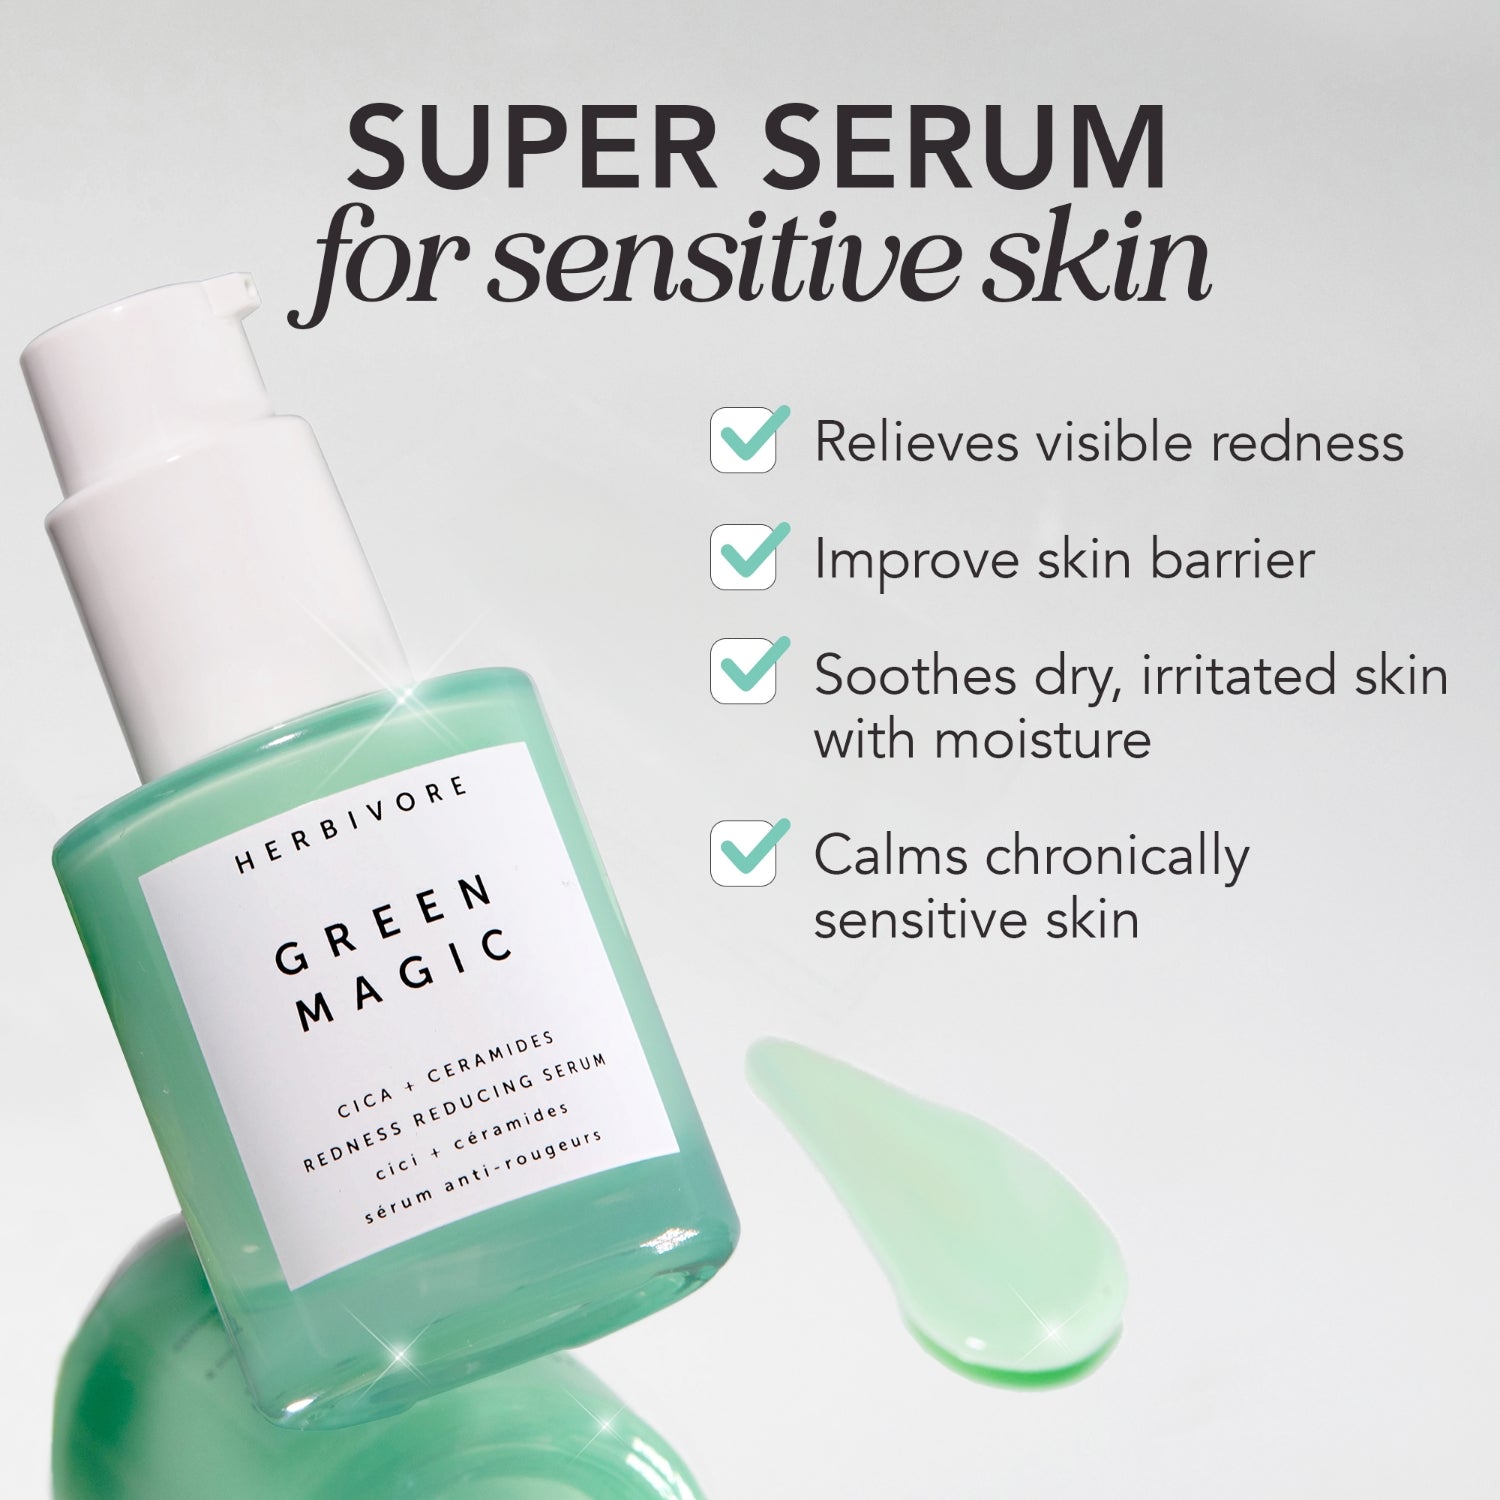 Reasons why Green Magic Serum is great for sensitive skin